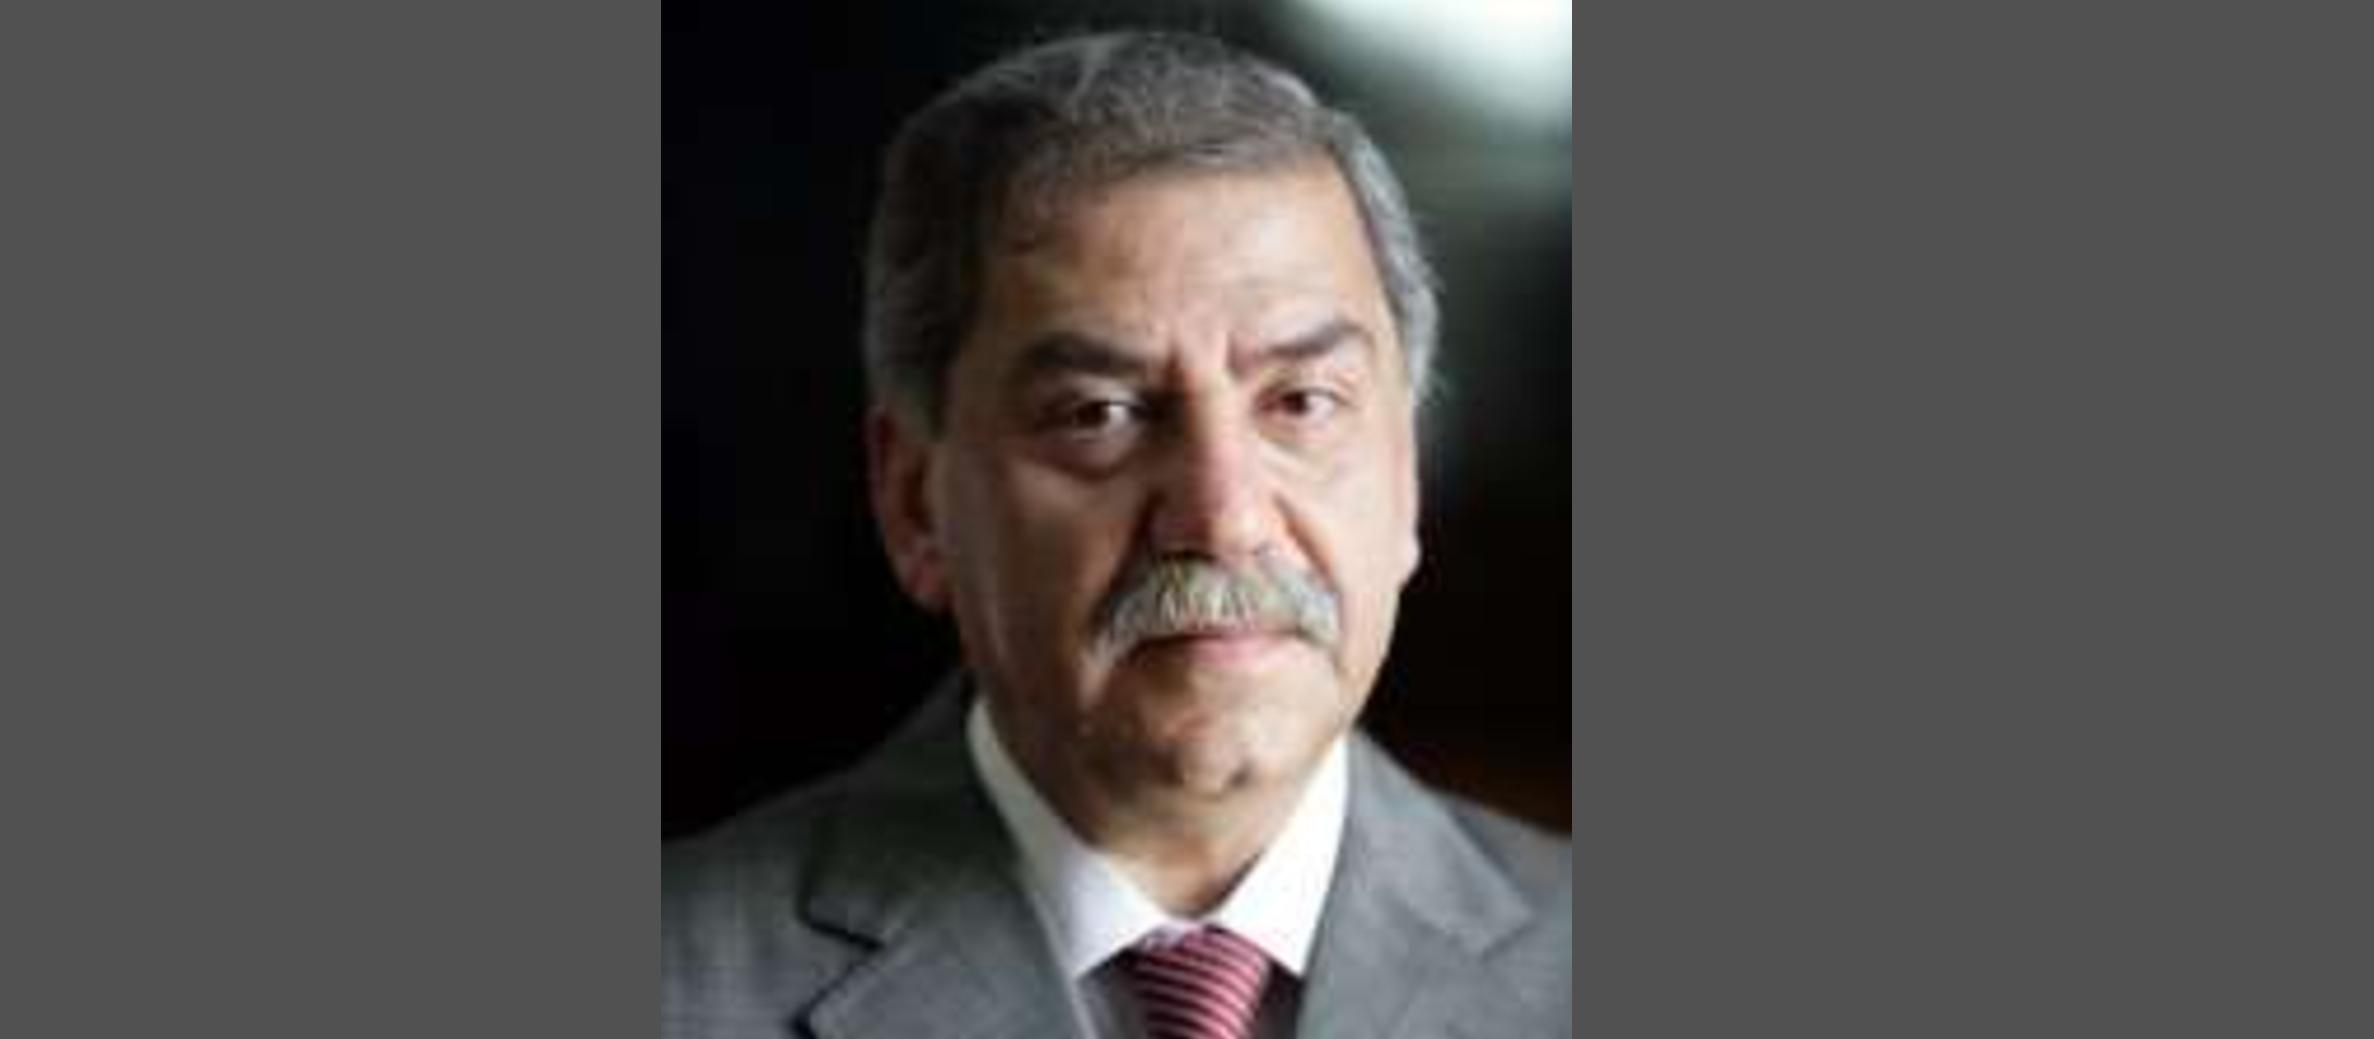 Iraqi MP: ‘Iraq should establish ties with Israel, we share interests’